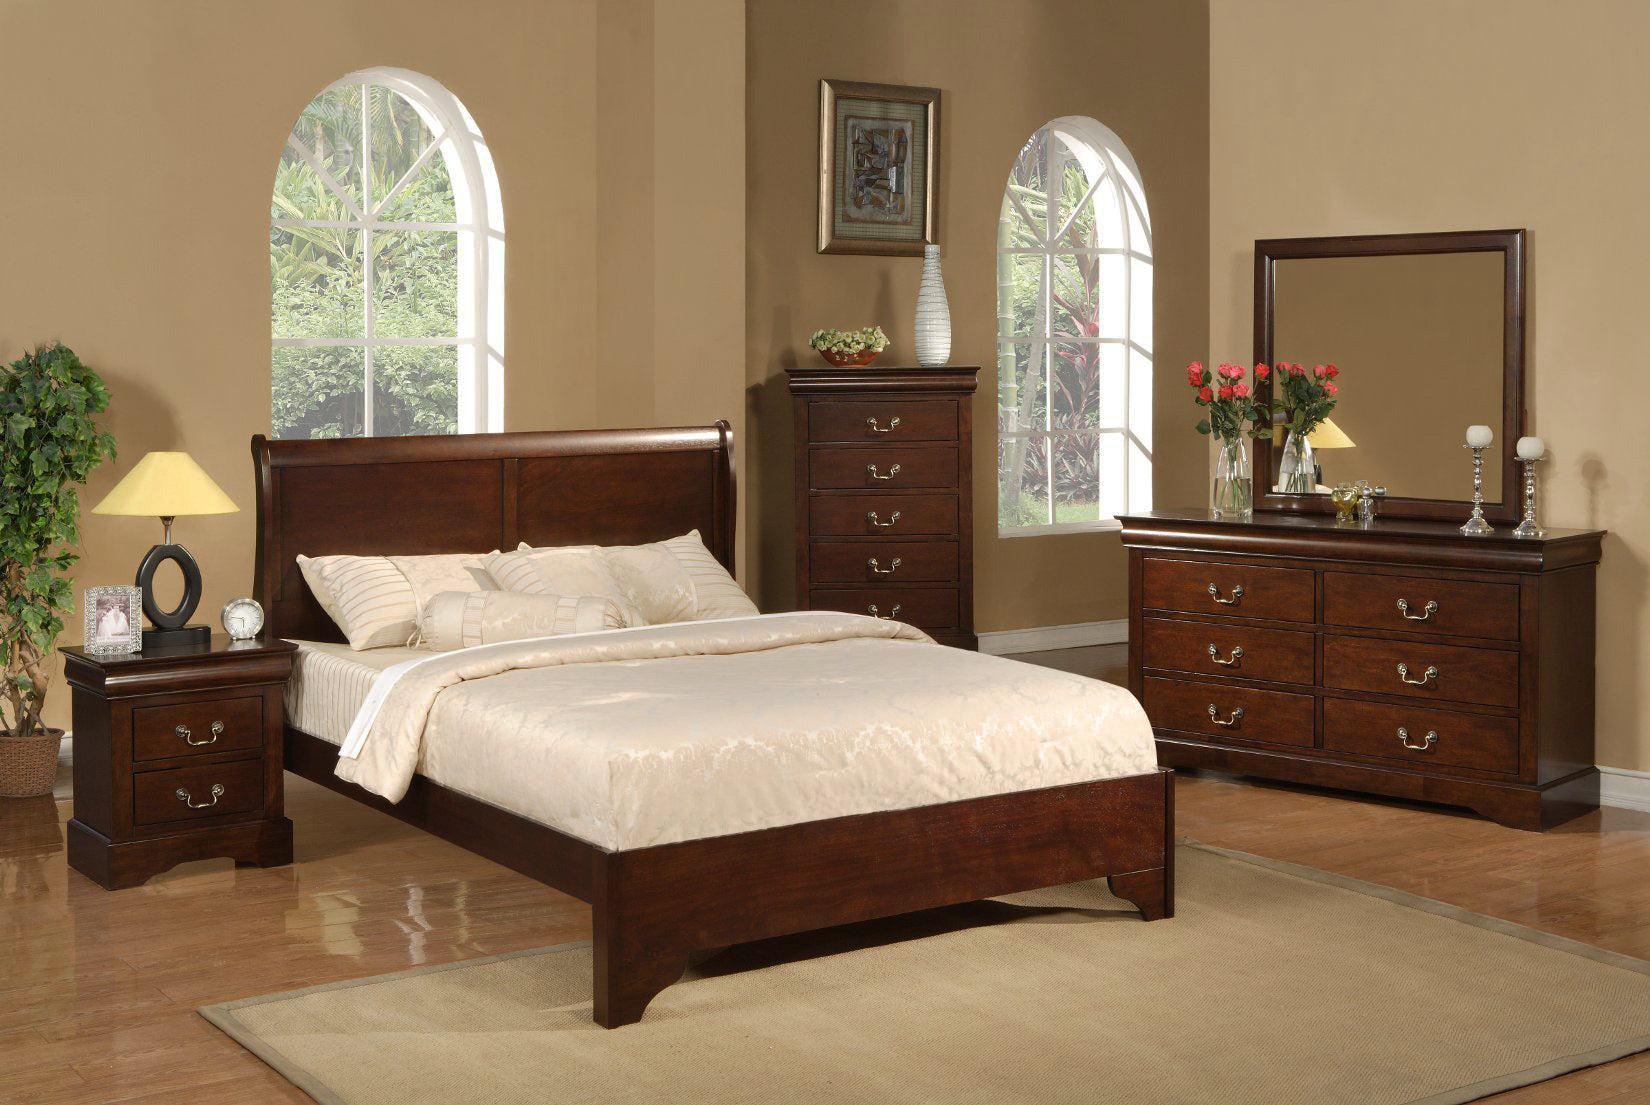 Alpine Furniture WEST HAVEN Sleigh Bedroom Set